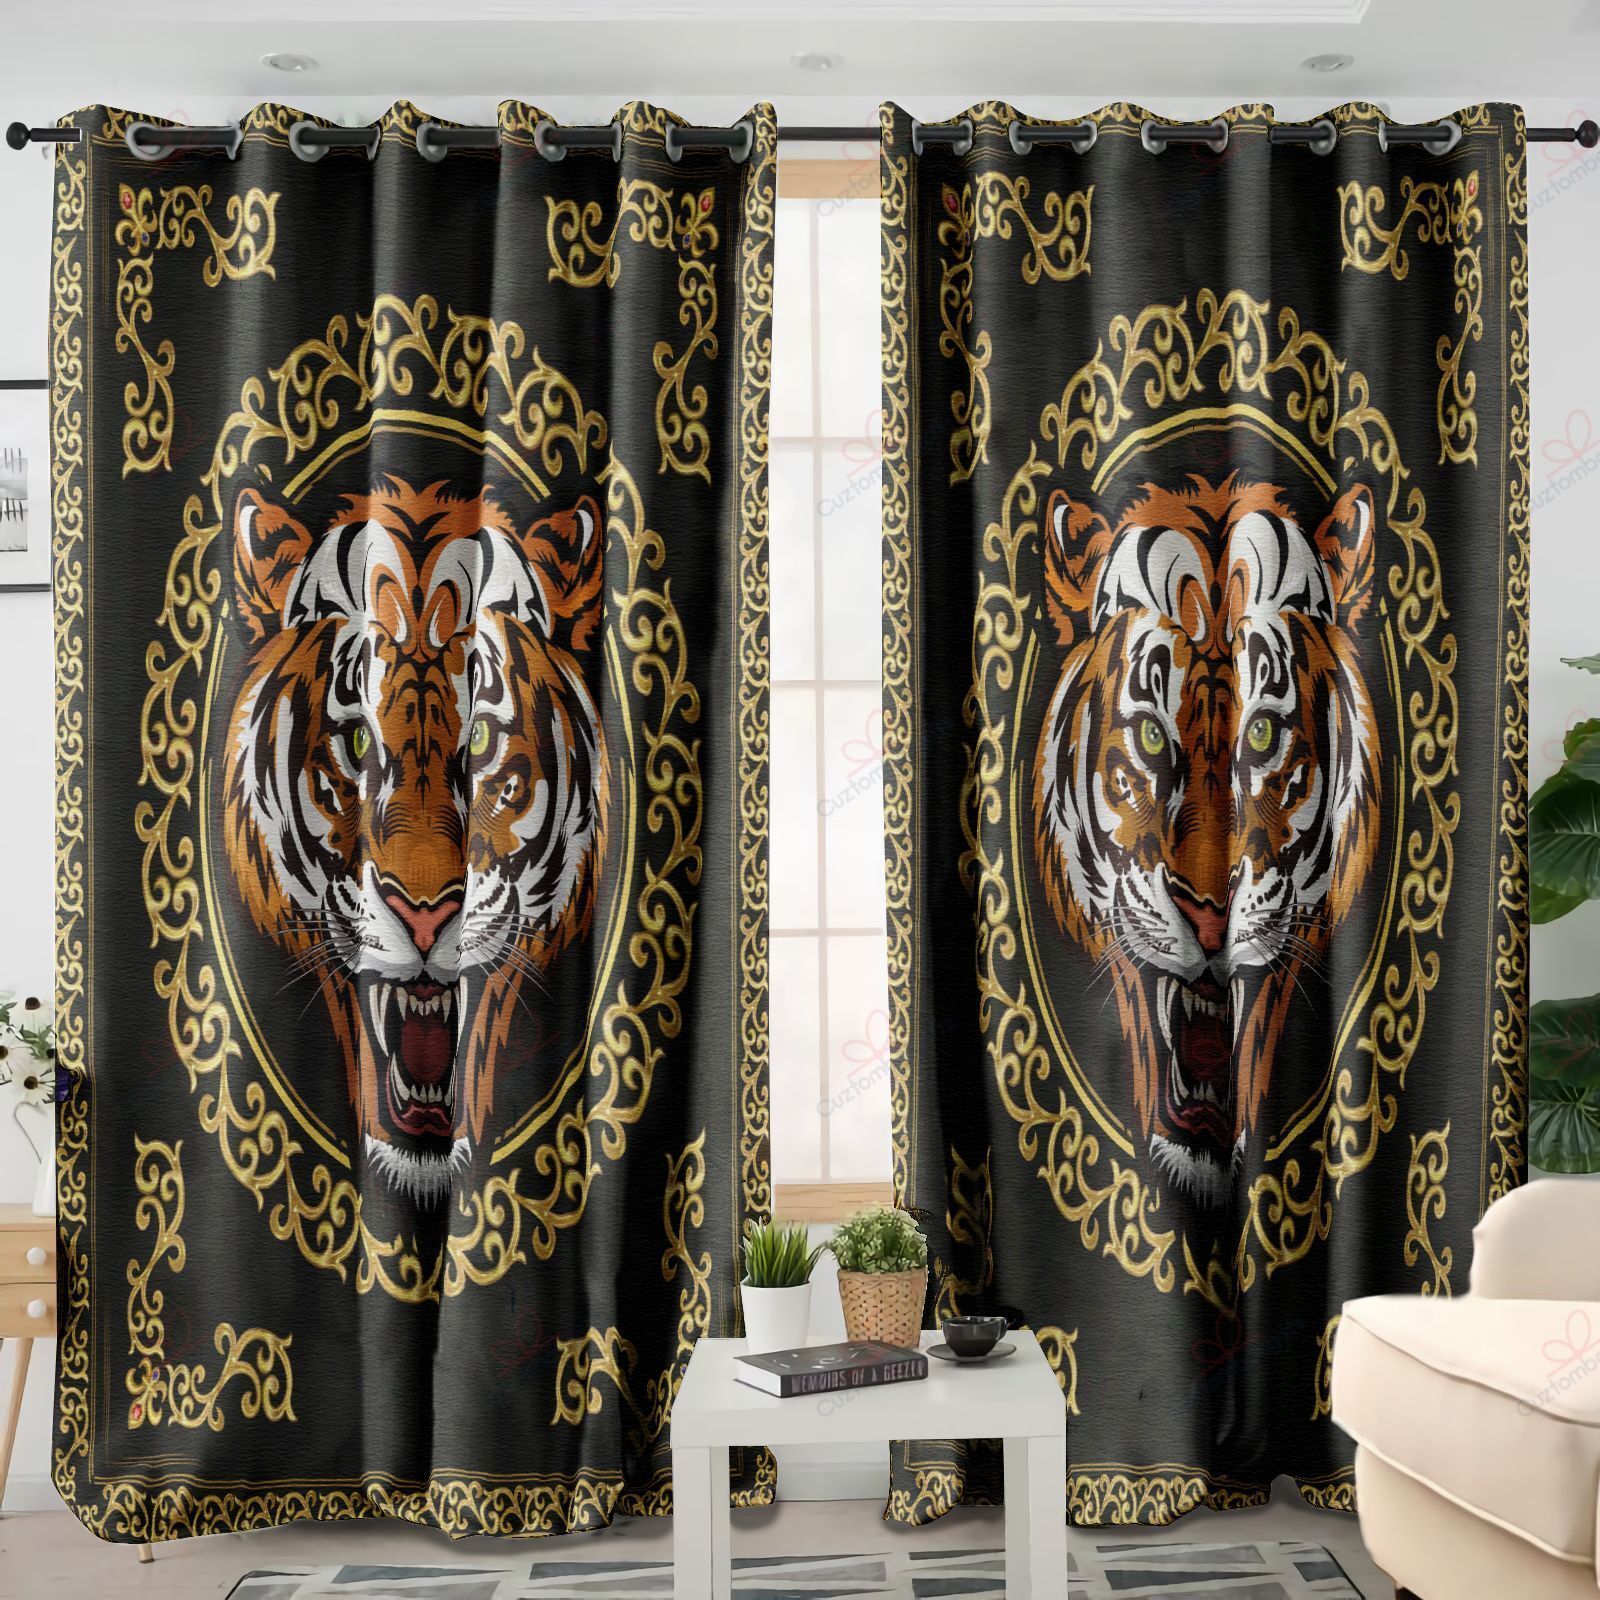 Hilarious Tiger Printed Window Curtain Home Decor